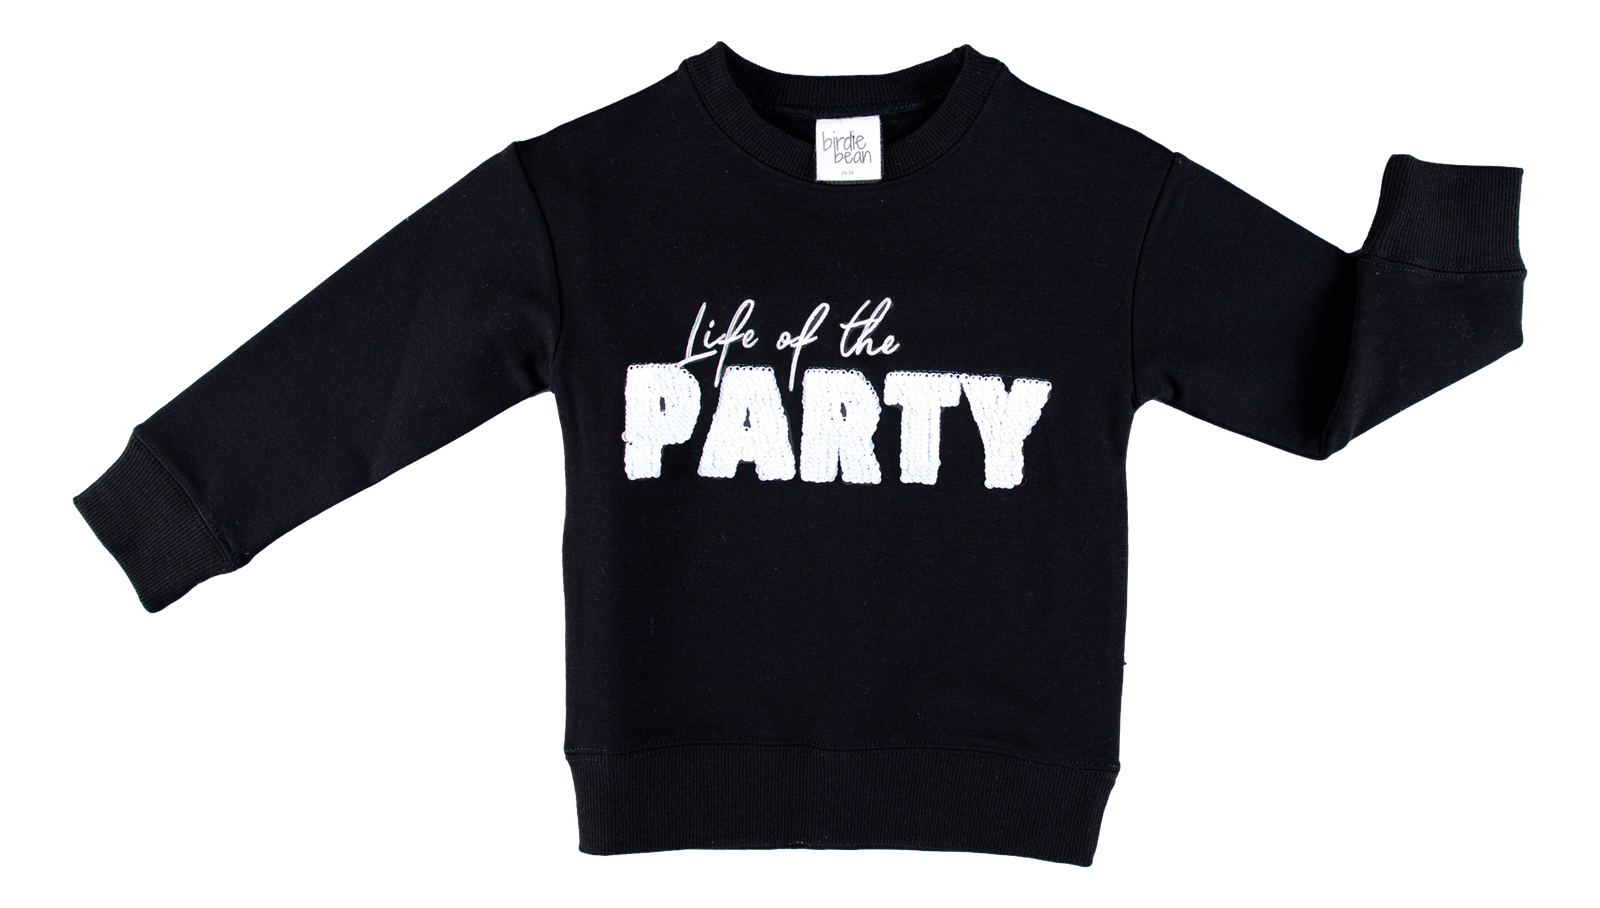 Birdie Bean Embroidered Sequin Crewneck Sweatshirt - Life of the Party